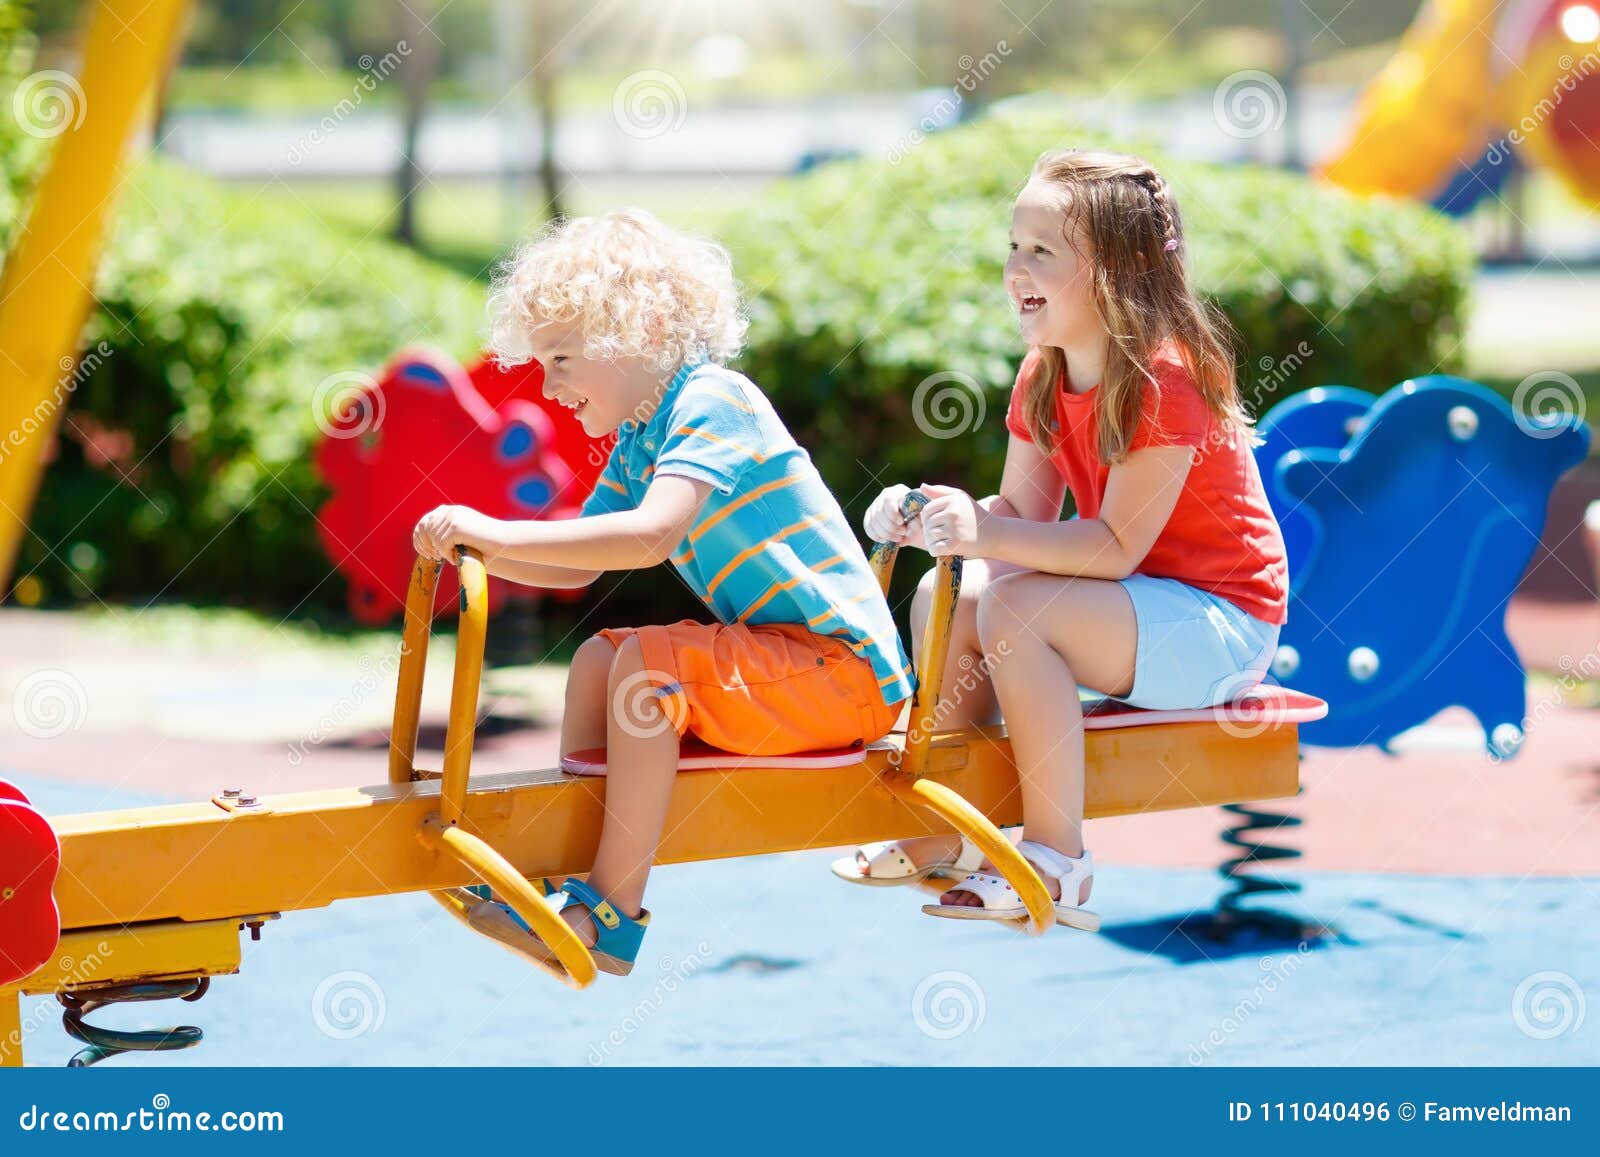 kid outdoor playground